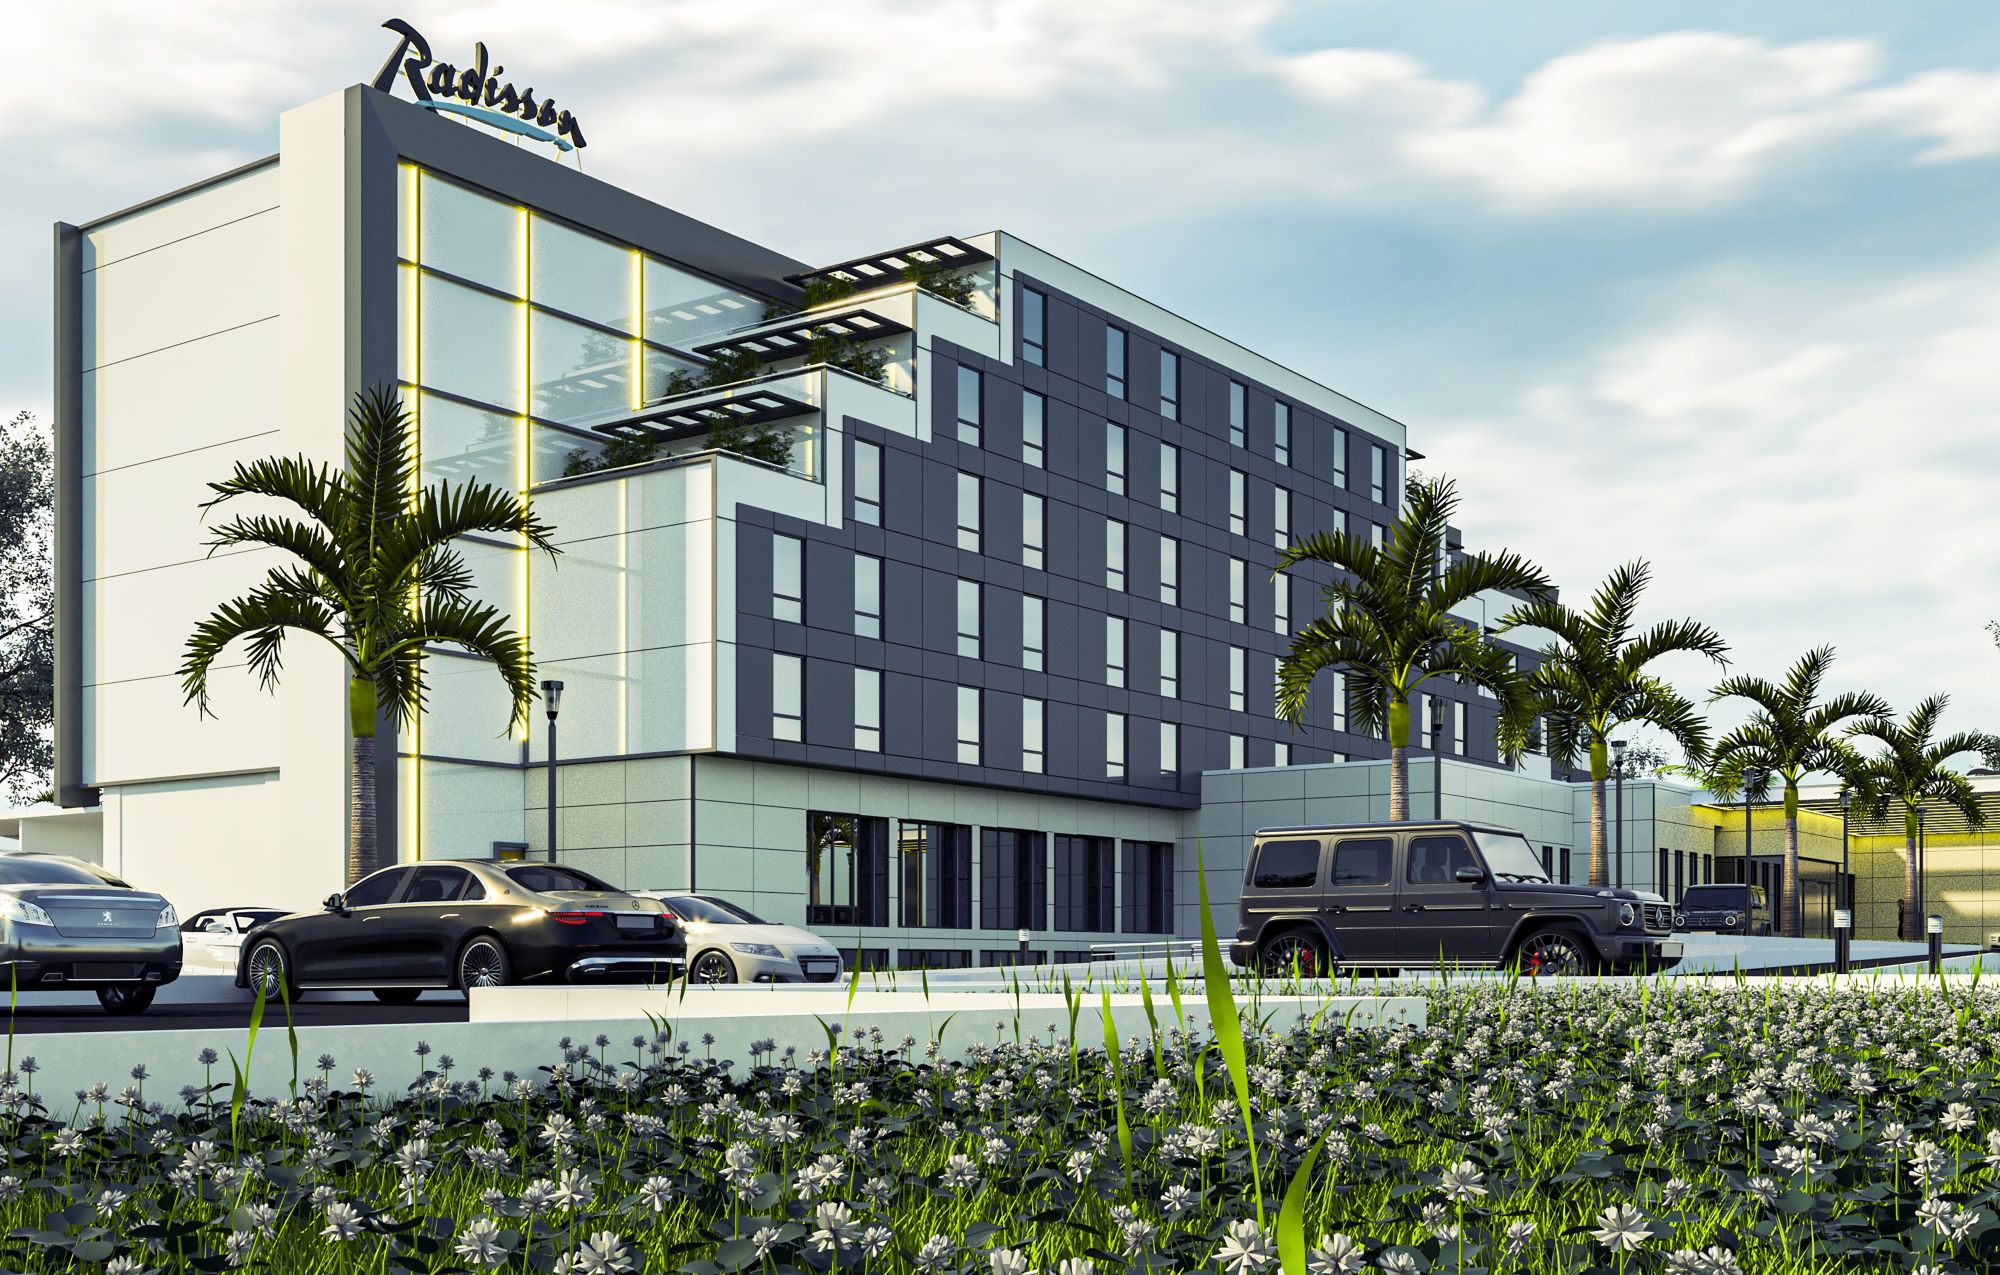 Radisson Hotel Benin City